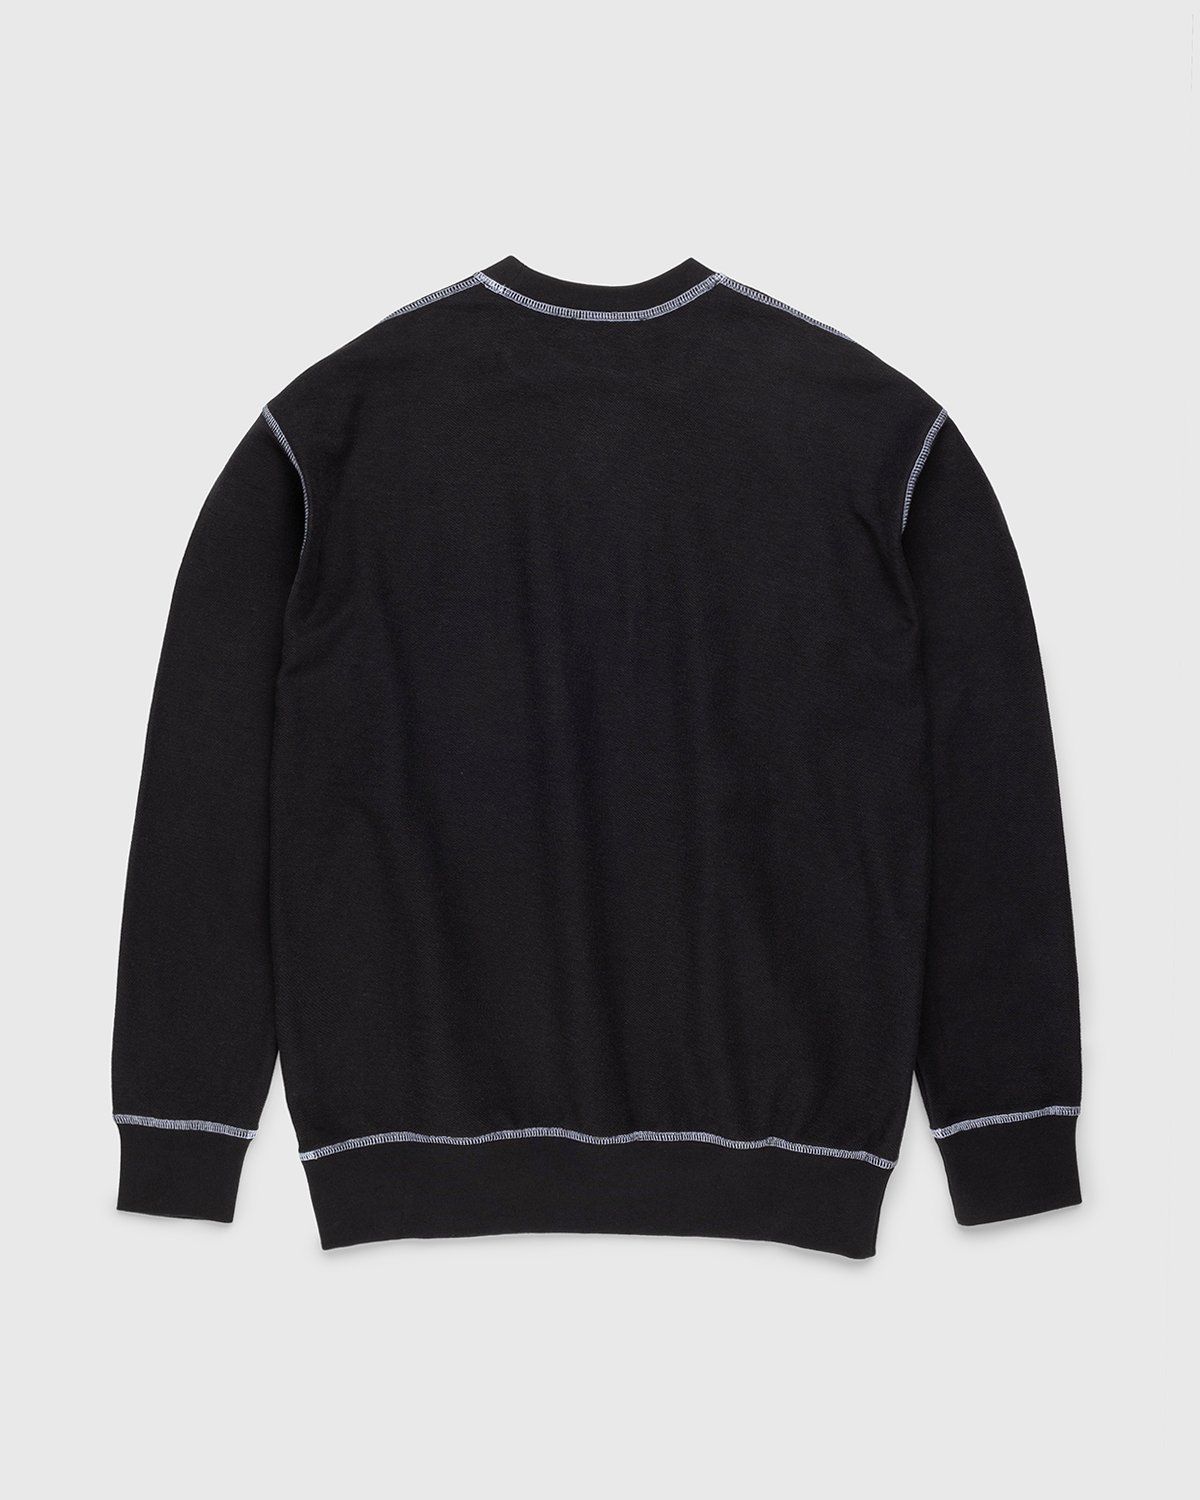 J.W. Anderson – Inside Out Contrast Sweatshirt Black - Sweatshirts - Black - Image 2